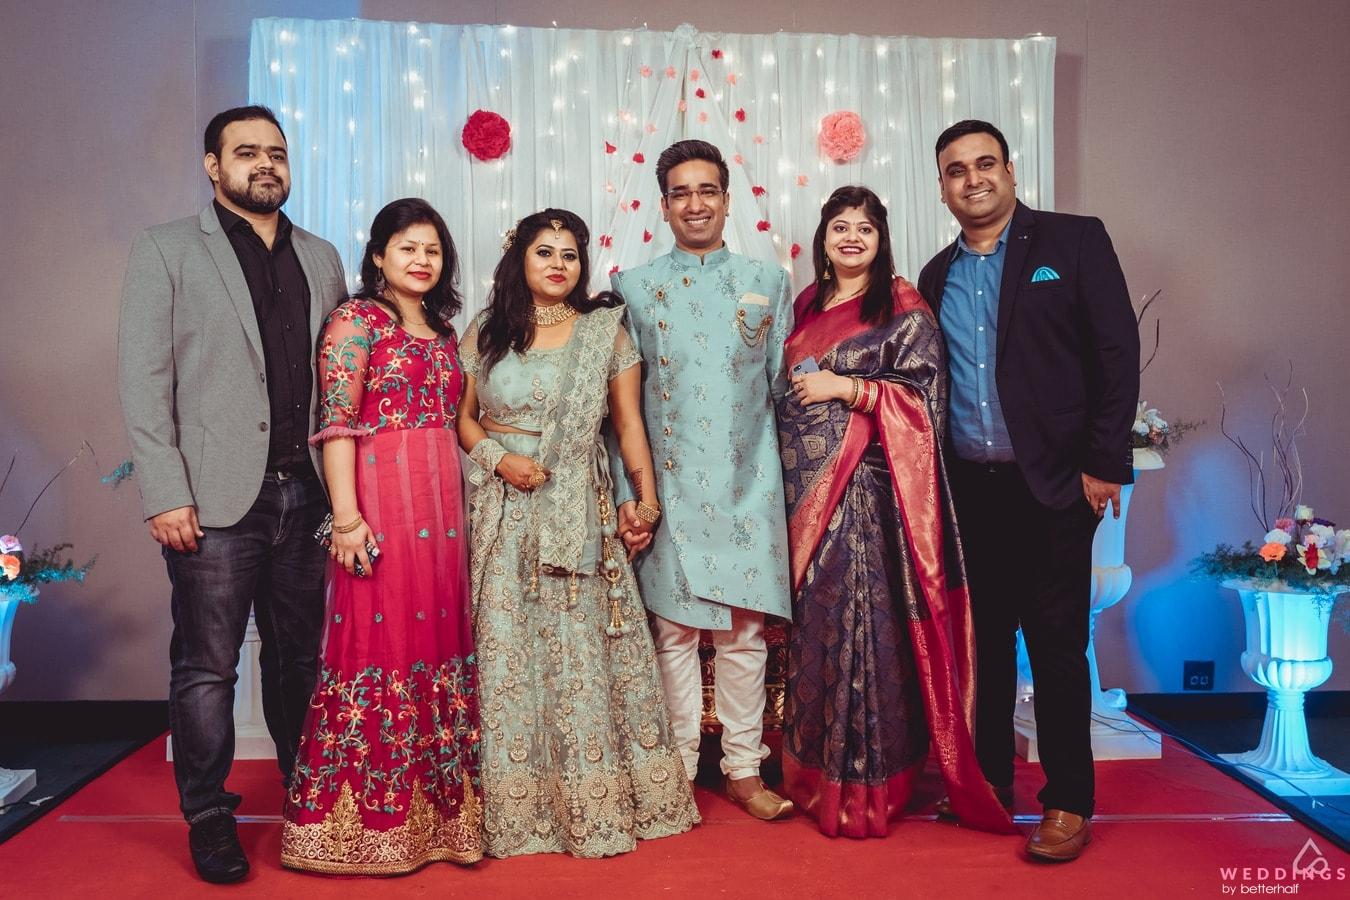 Shoshank Makeup Artist on Instagram: “#keralawedding #traditional #mak… |  Indian wedding photography poses, Wedding couple poses, Indian wedding  photography couples